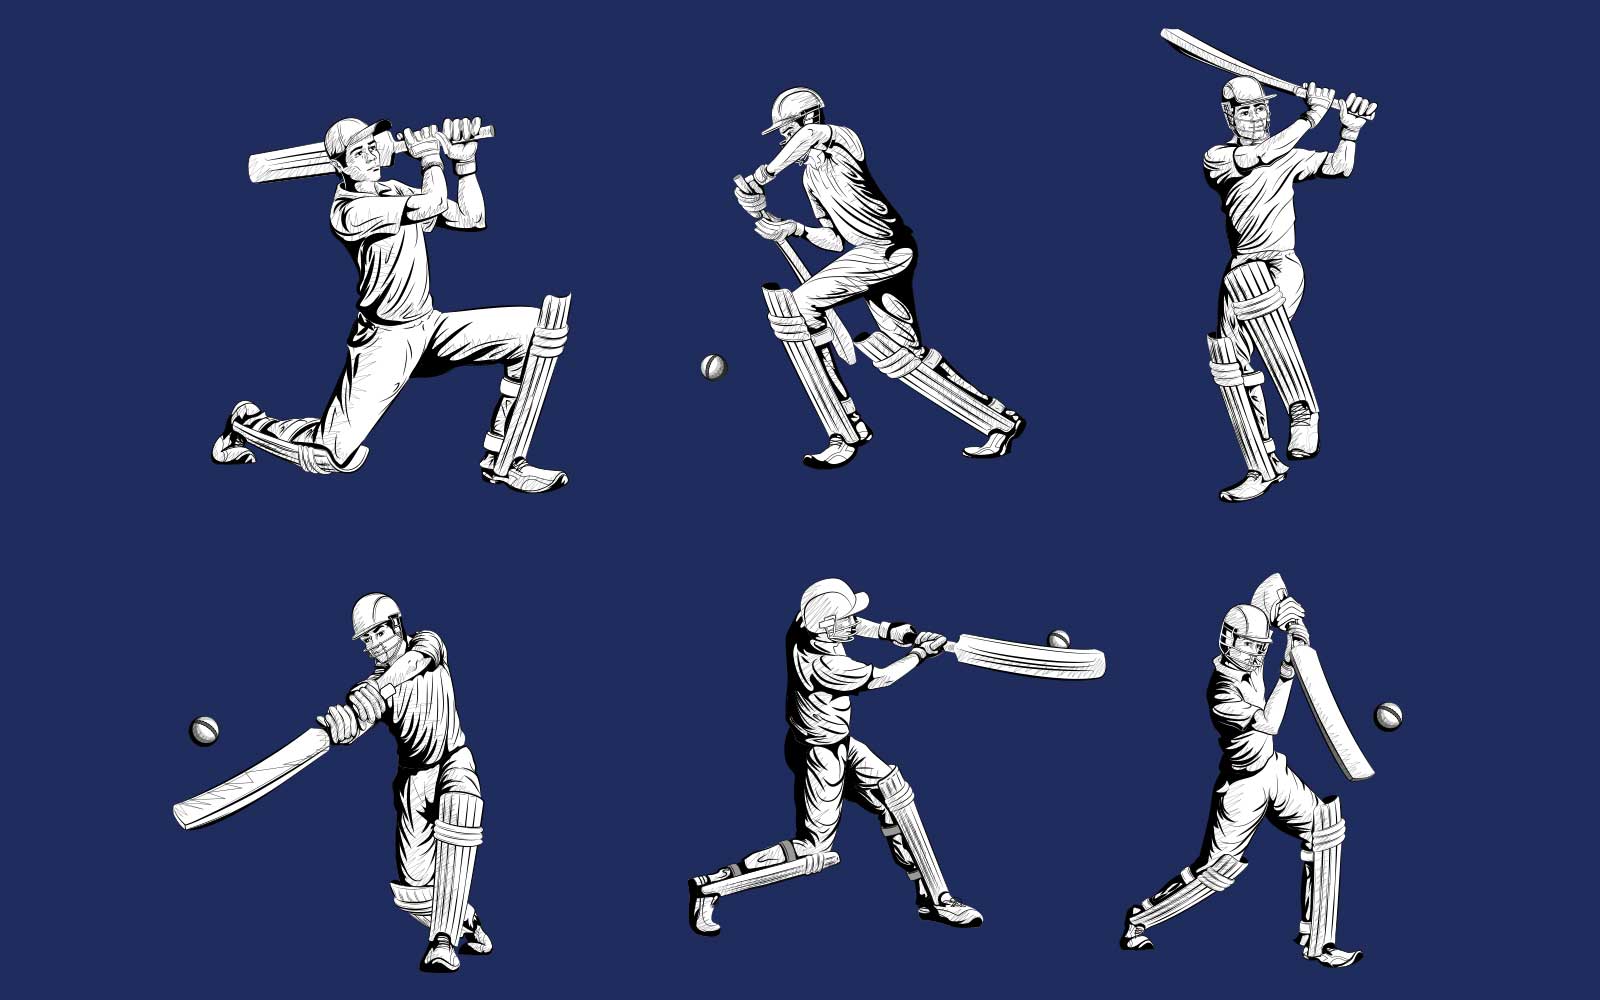 Cricket batting basics, 5 basics of cricket batting for beginners